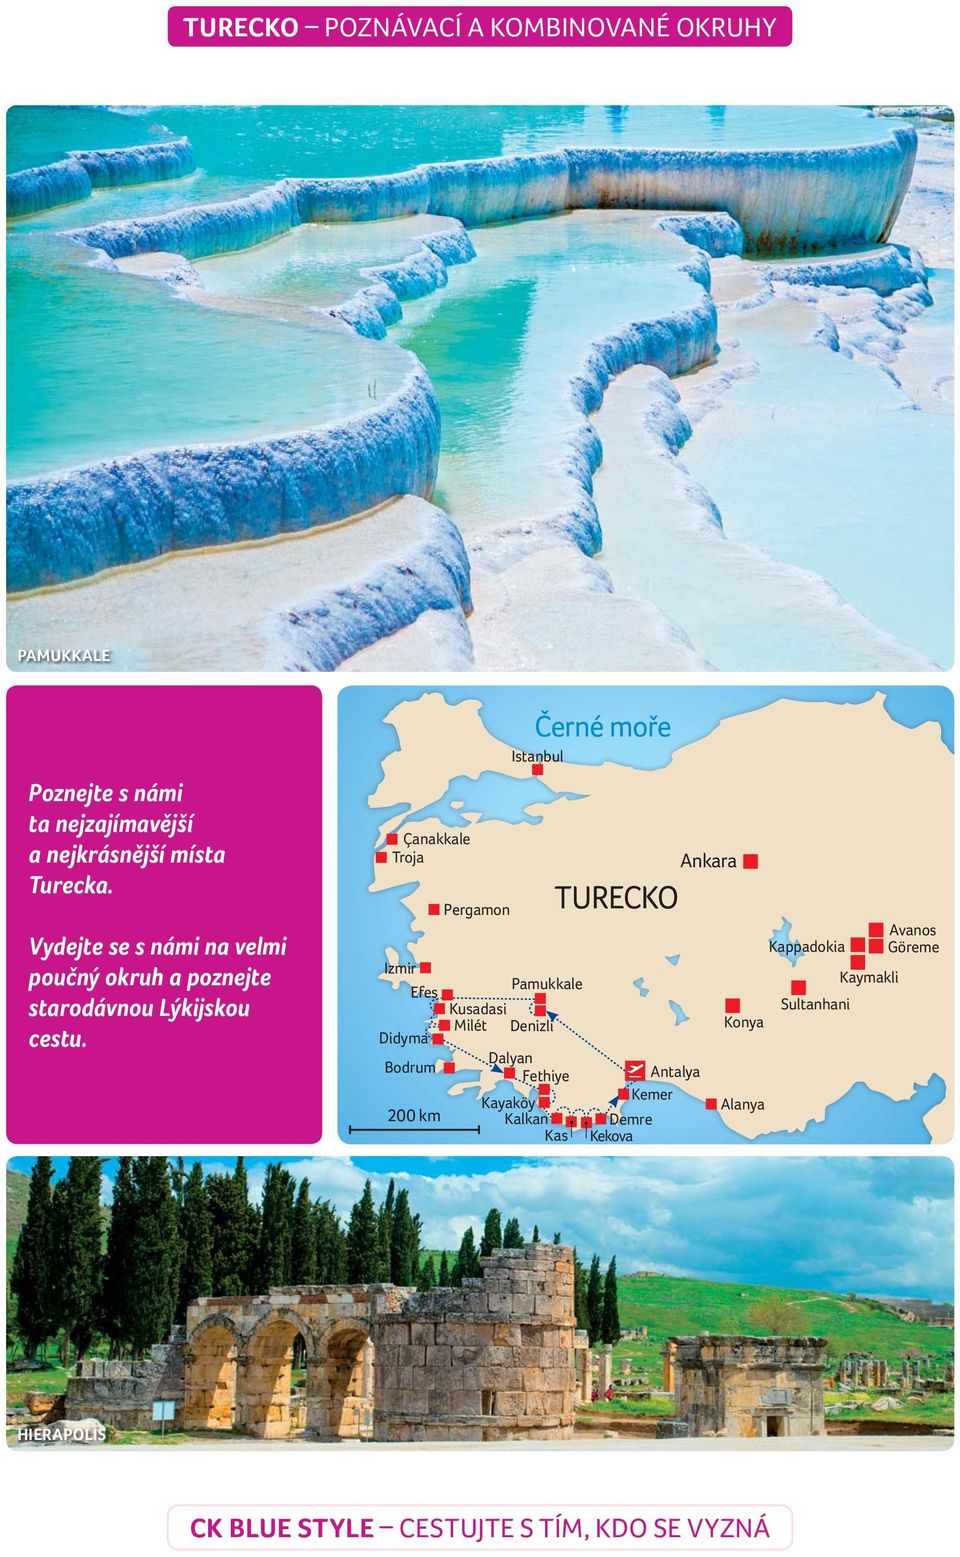 Çanakkale Troja Izmir Efes Didyma Bodrum 200 km Pergamon Černé moře Istanbul Pamukkale Kusadasi Milét